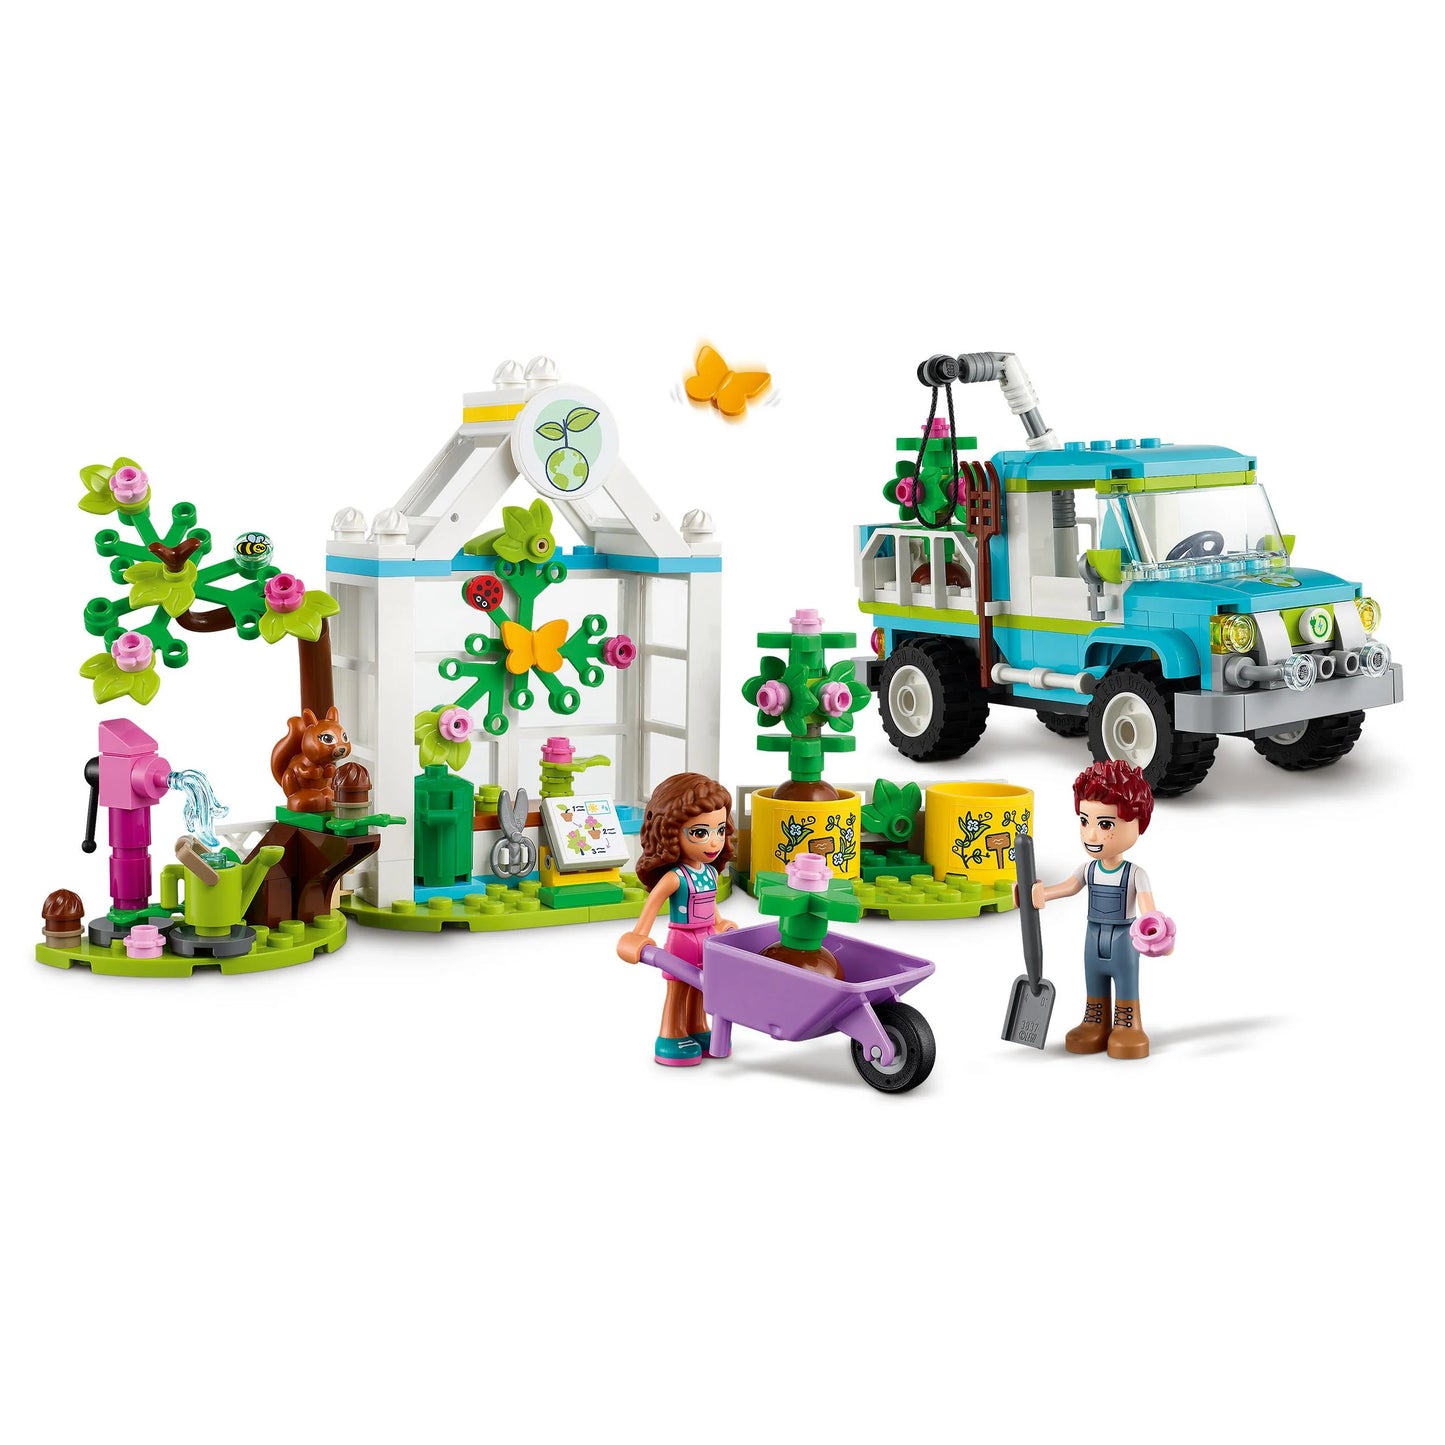 Planting Truck - LEGO Friends